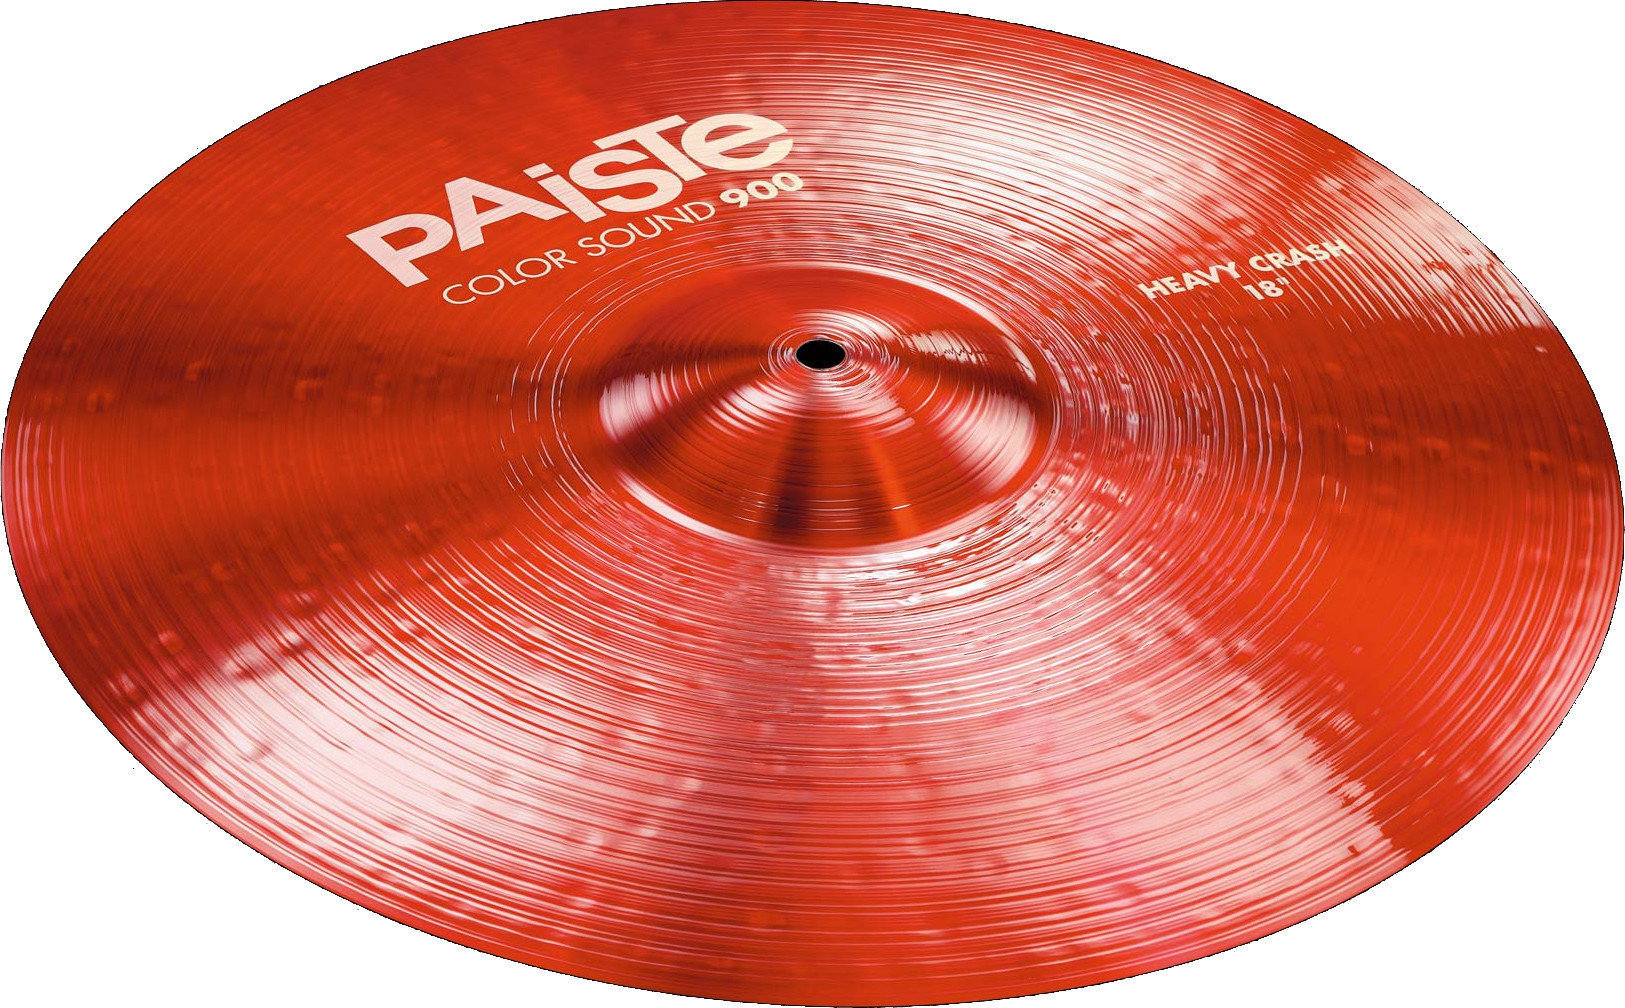 Crash Cymbal Paiste Color Sound 900  Heavy Crash Cymbal 17" Röd